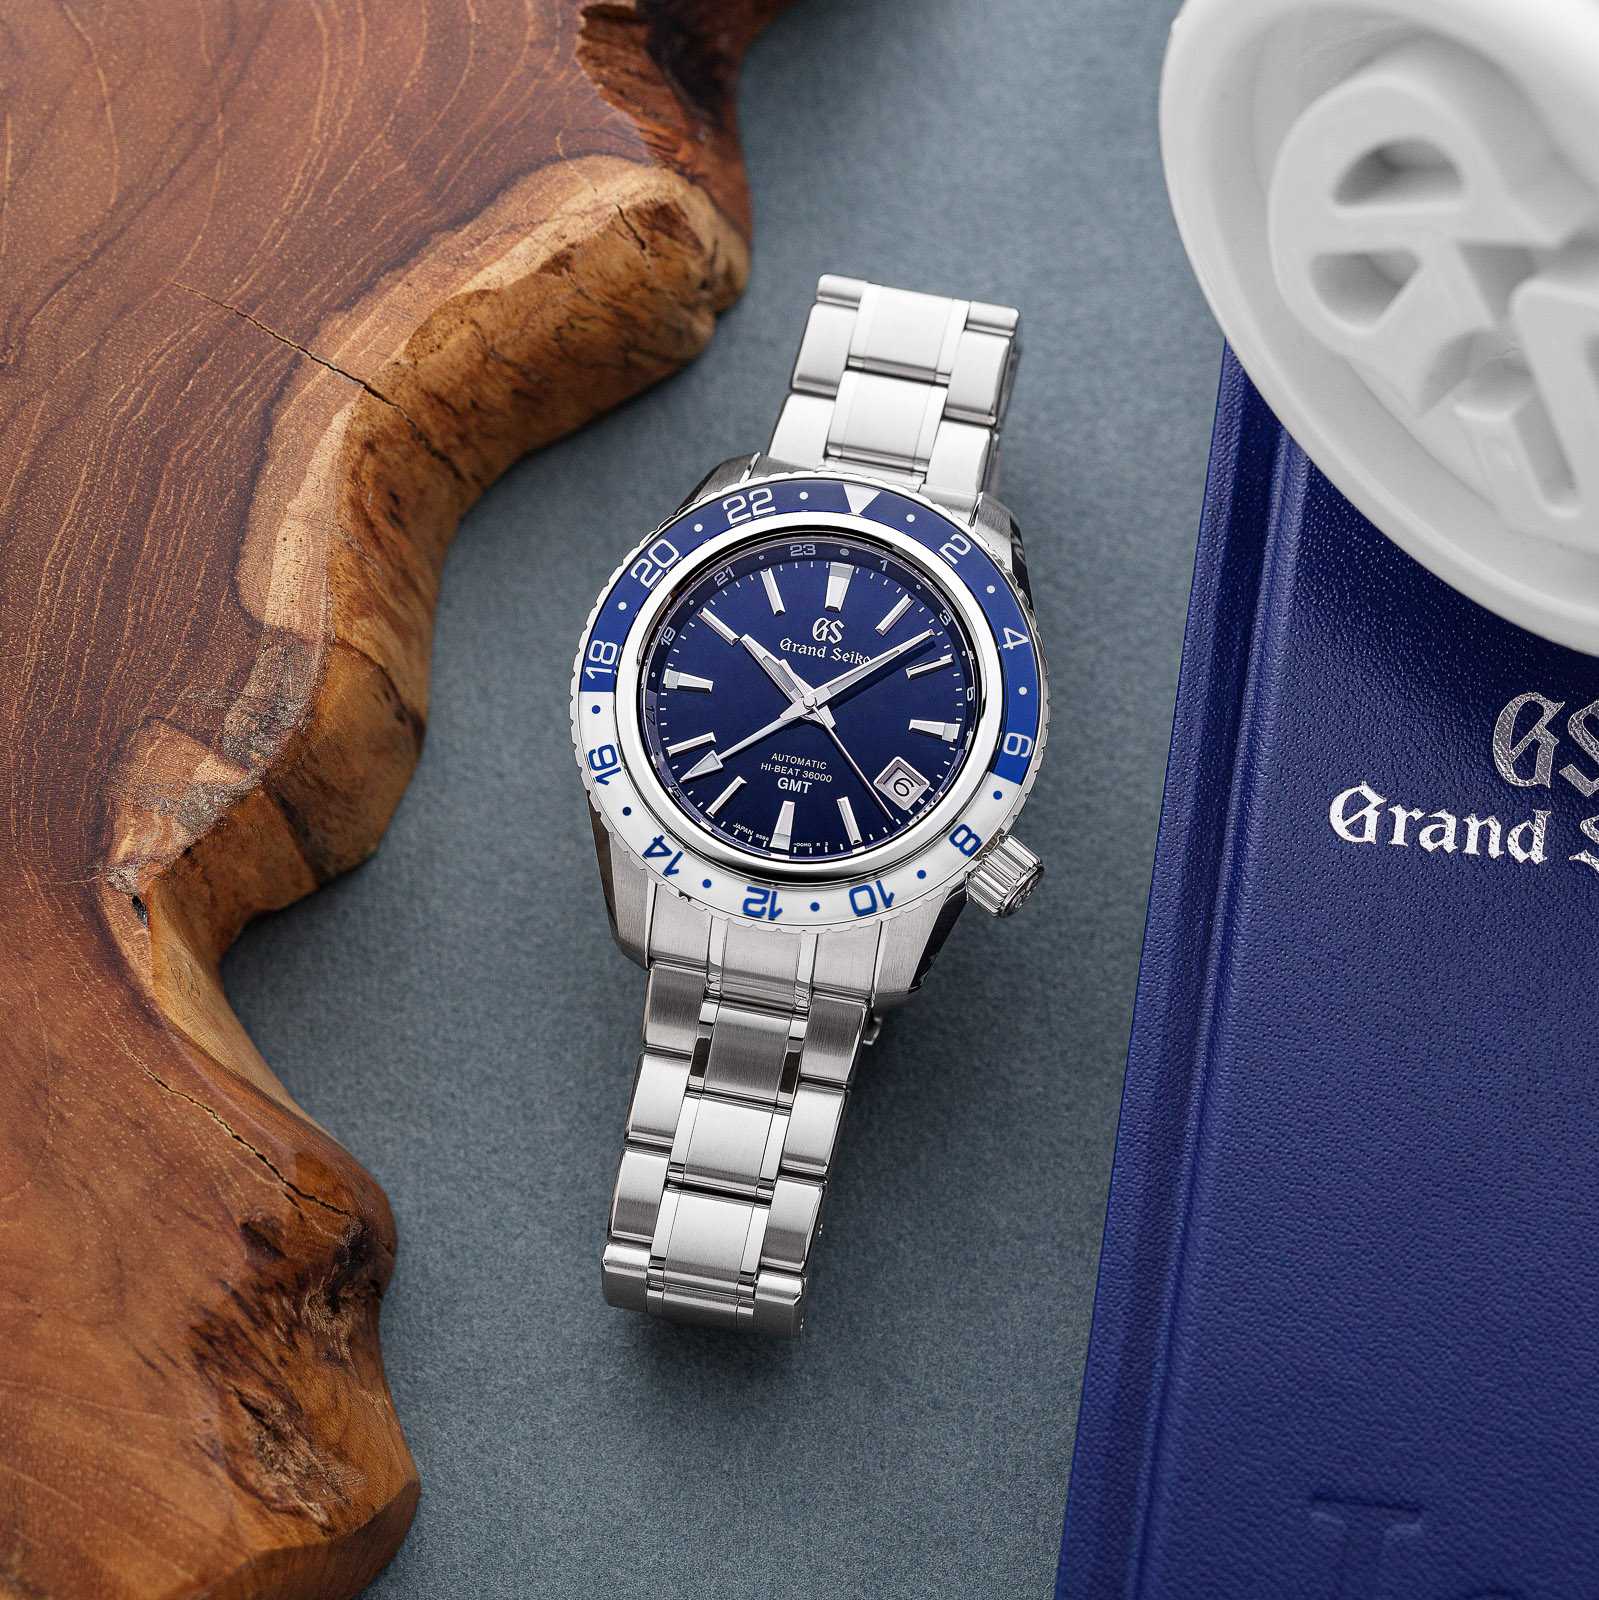 Grand Seiko Hi-Beat 36000 GMT Blue SBGJ237 Sport Watch – Grand Seiko  Official Boutique